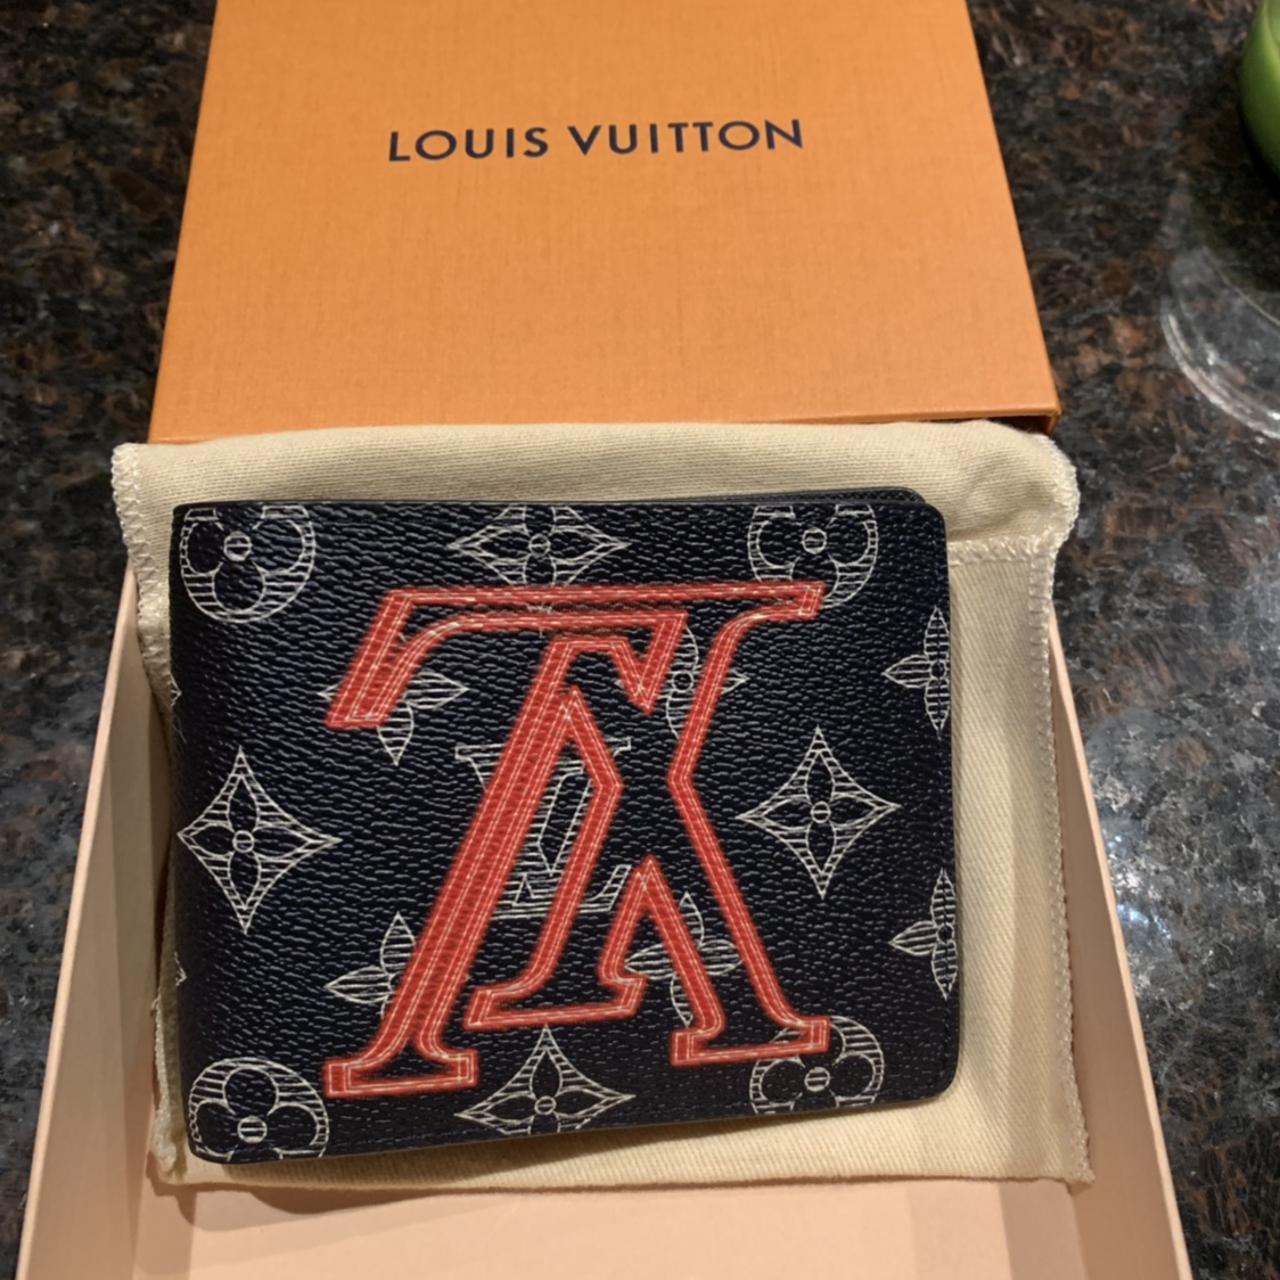 BNIB | Louis Vuitton Upside Down Wallet